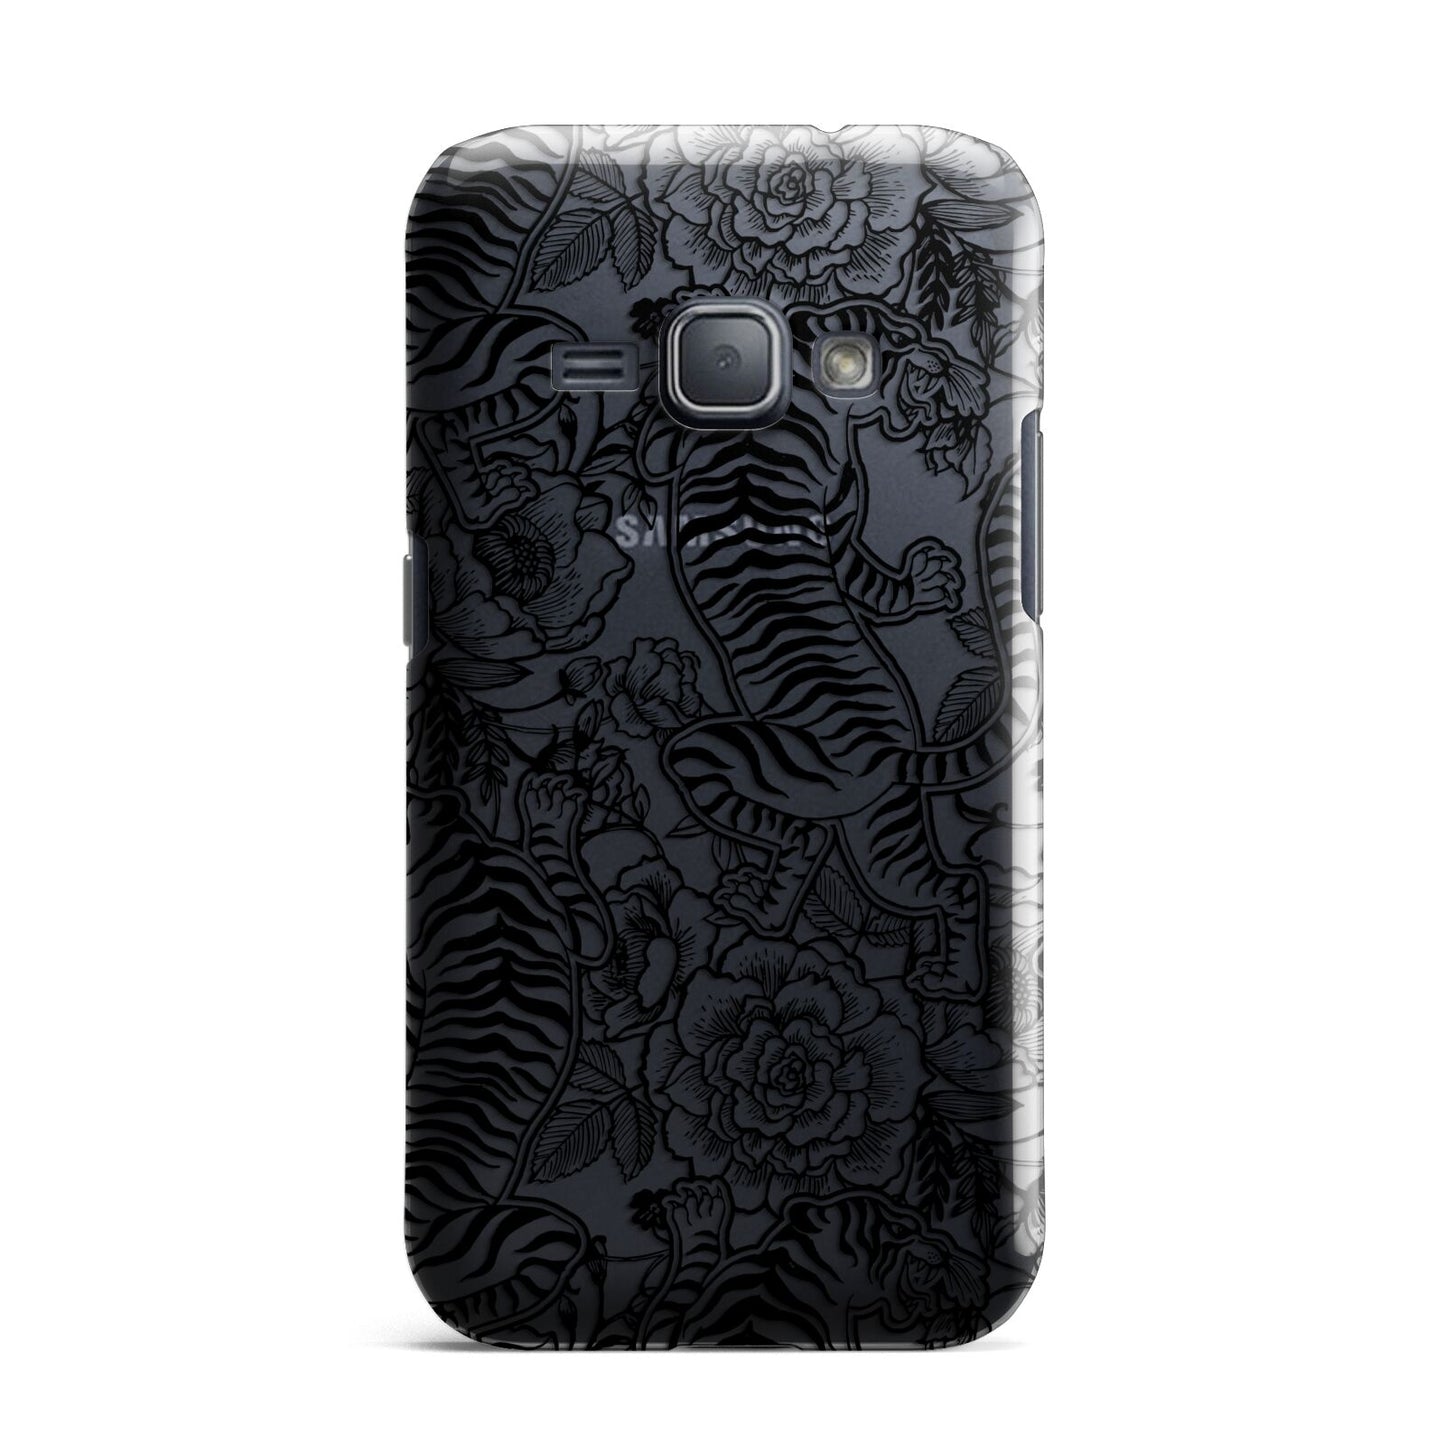 Chinese Tiger Samsung Galaxy J1 2016 Case